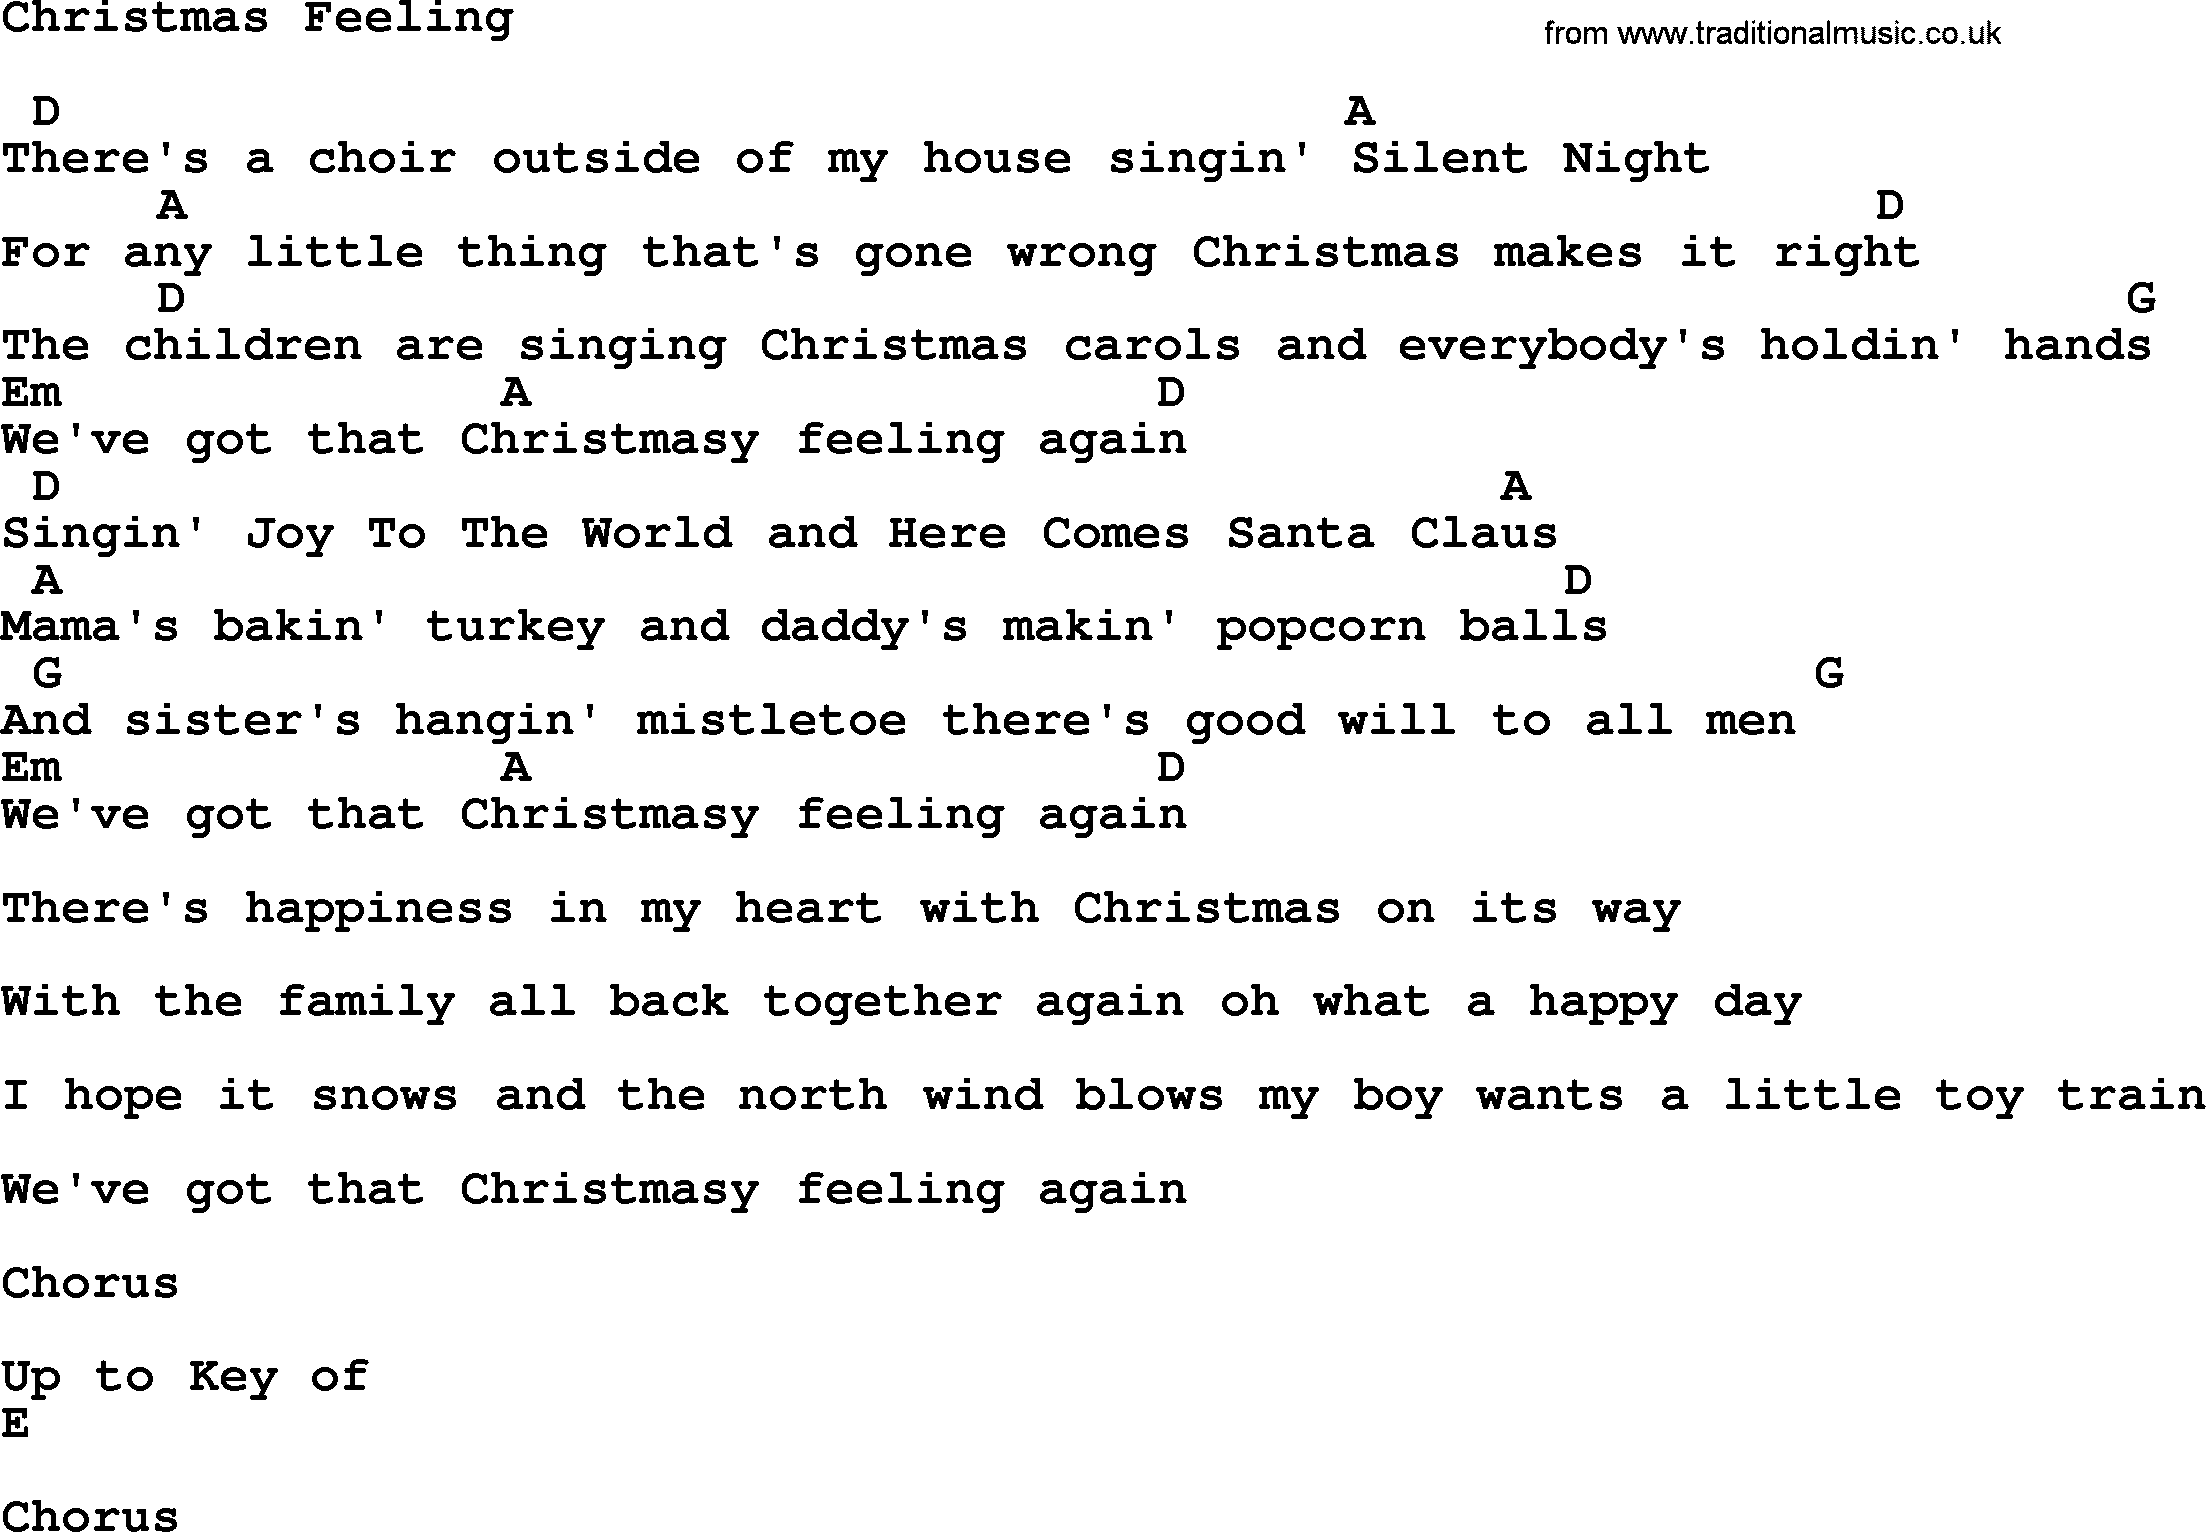 Johnny Cash song Christmas Feeling, lyrics and chords